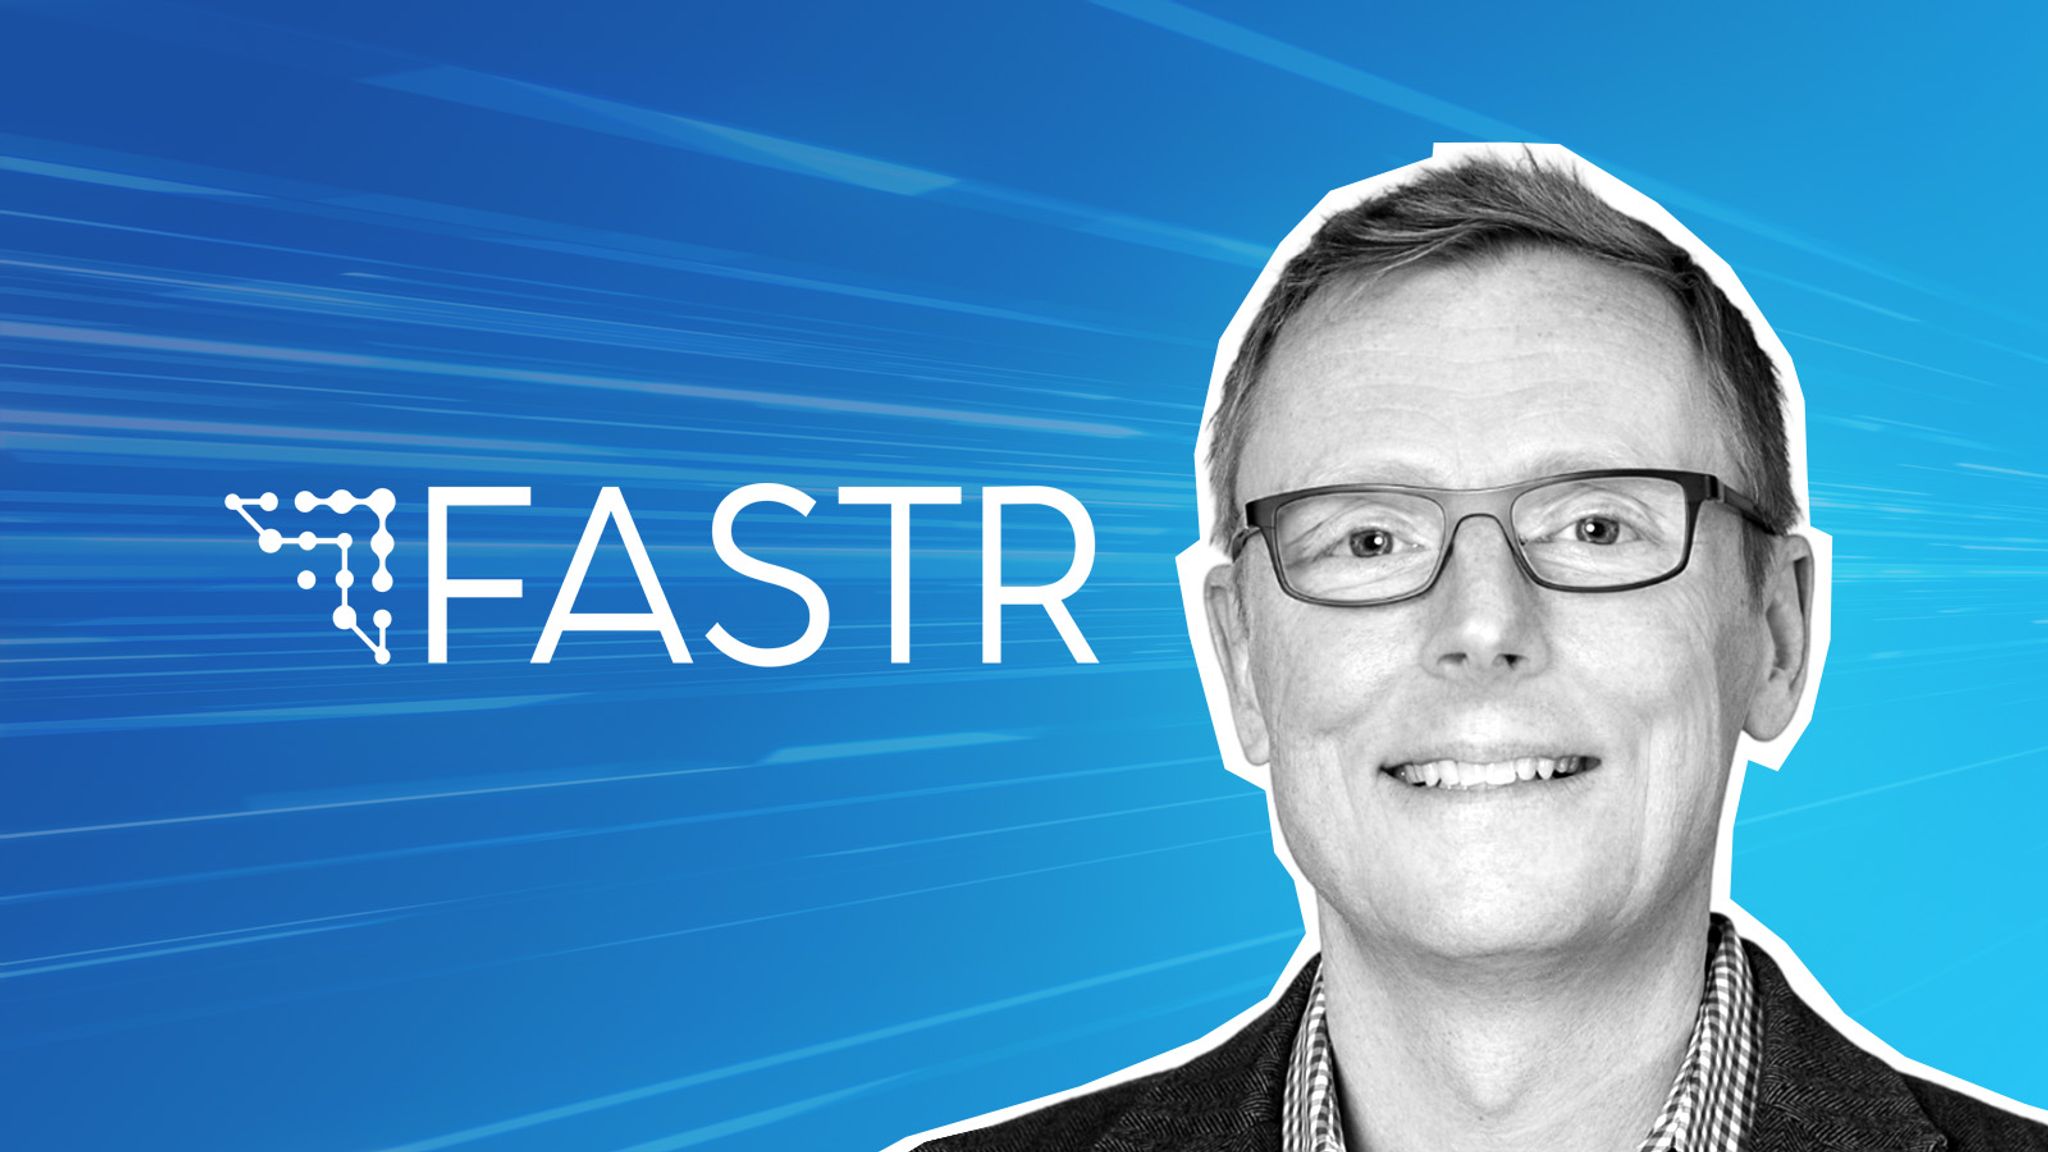 John Murdock headshot, CEO of Fastr, with Fastr logo